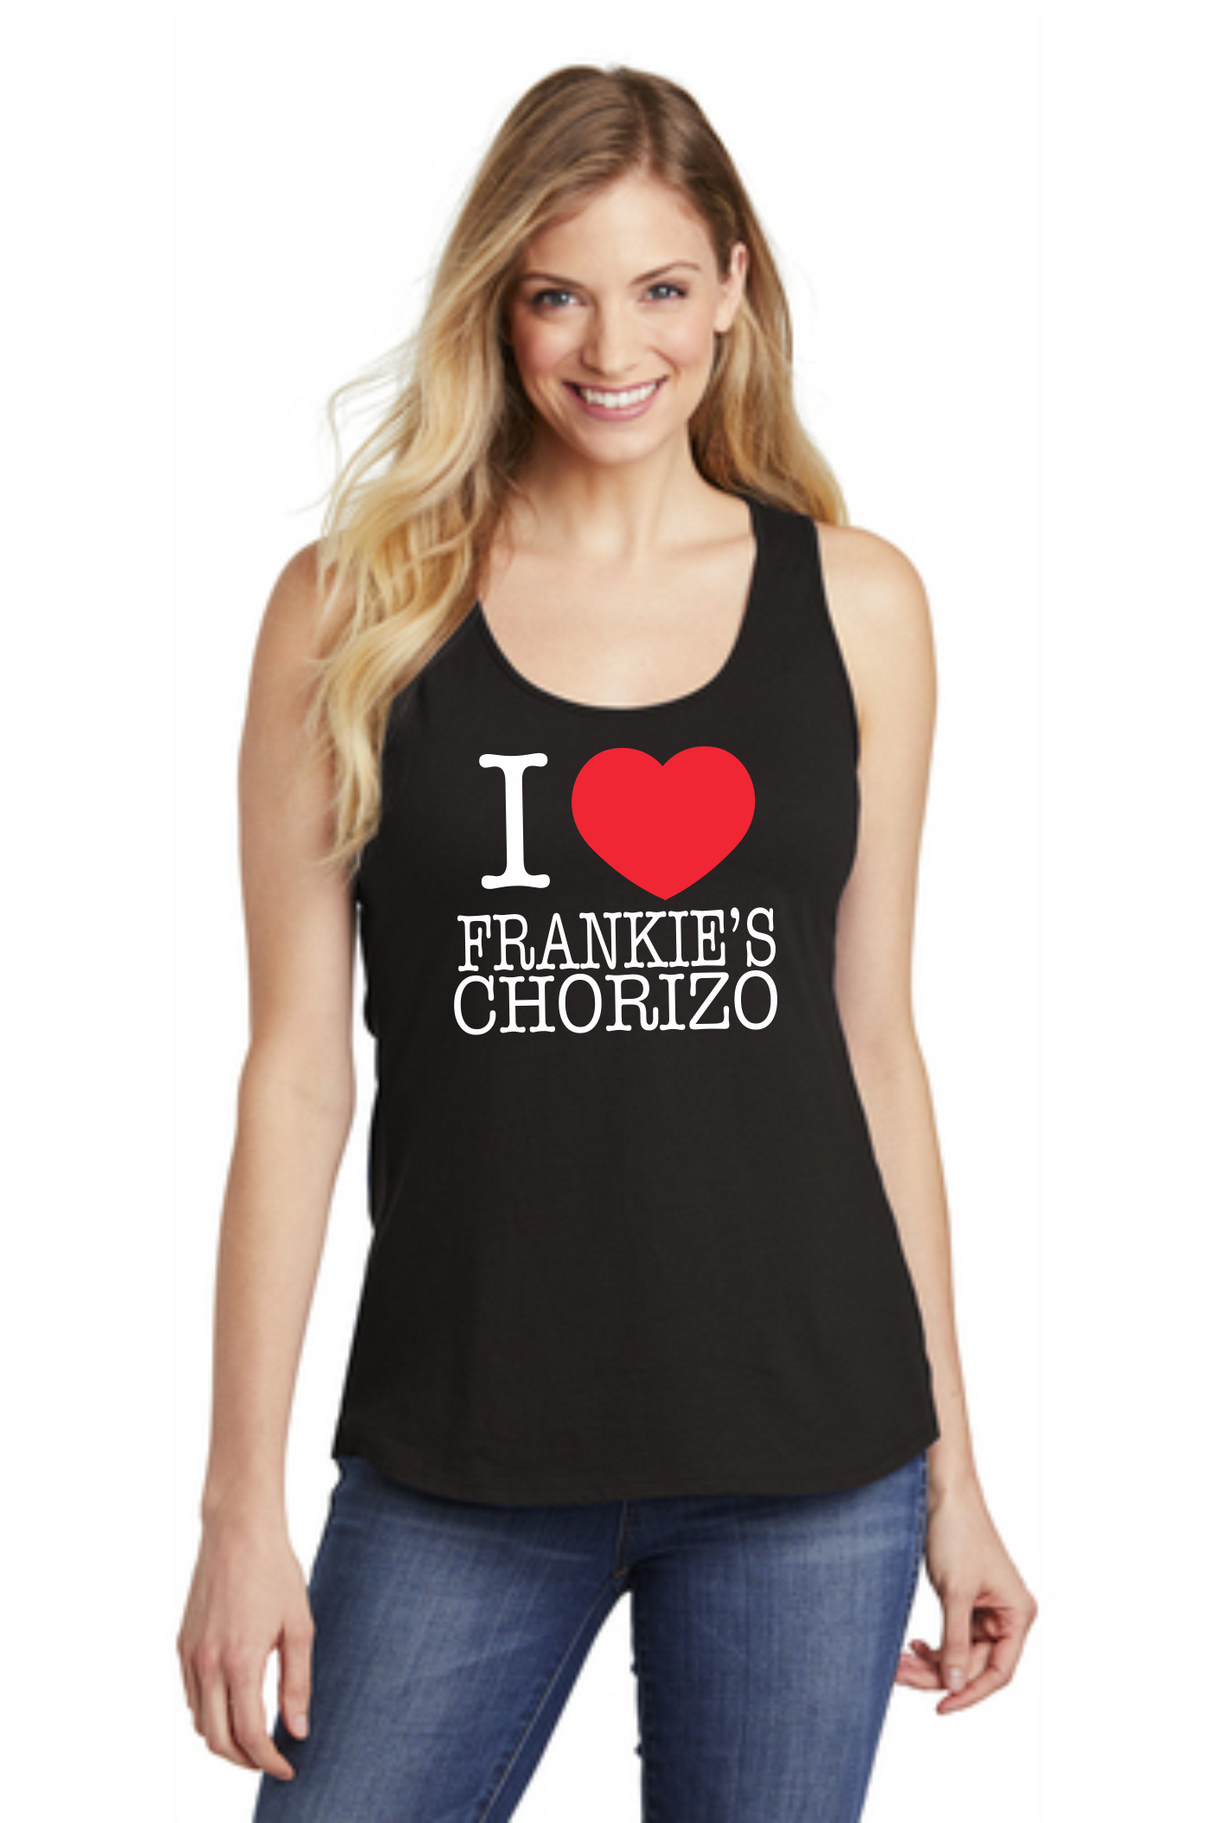 Chala's "Frankie's Chorizo" Women's Cotton Tank